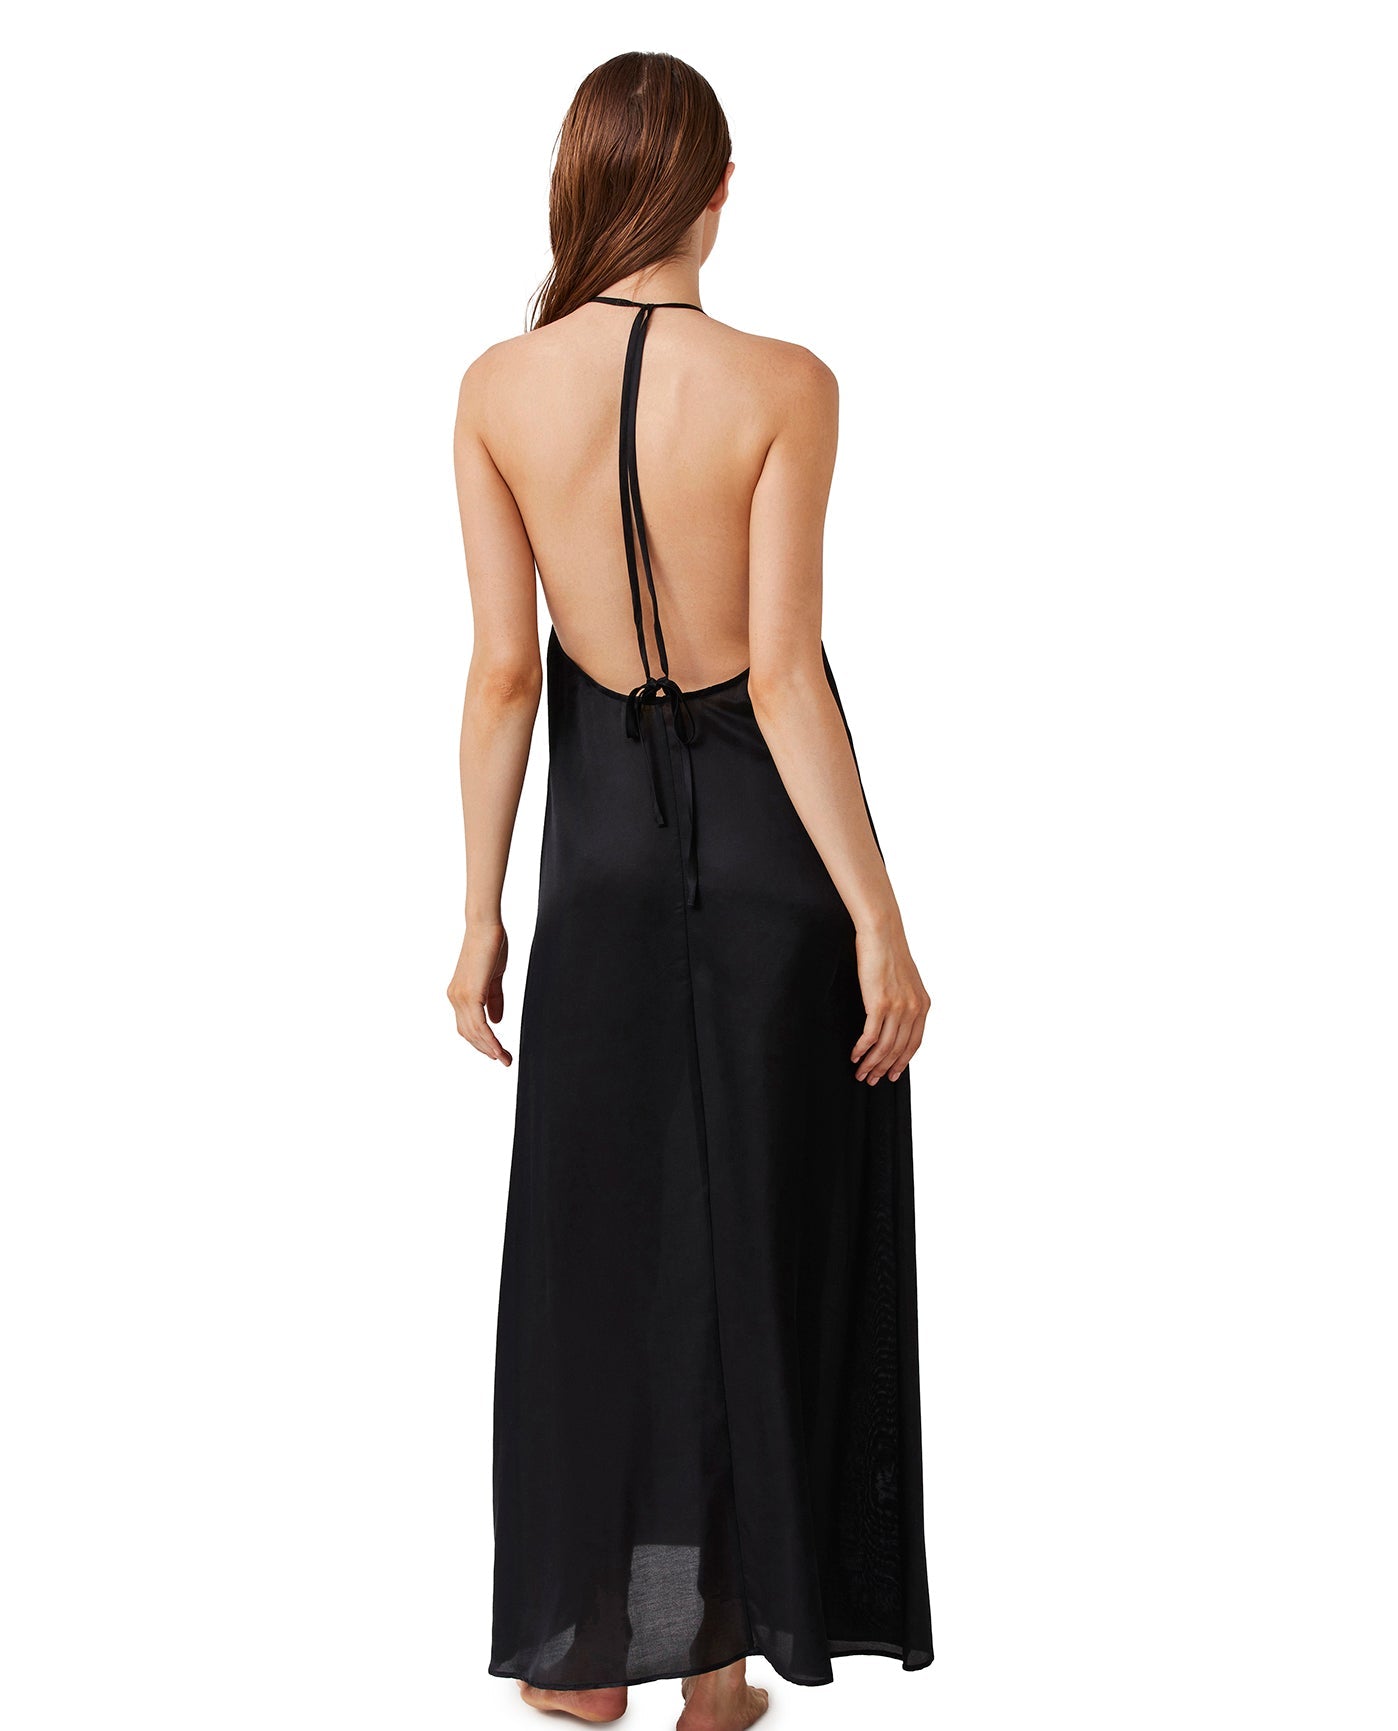 Back View Of Luma High Neck Long Dress Cover Up | LUMA BLACK